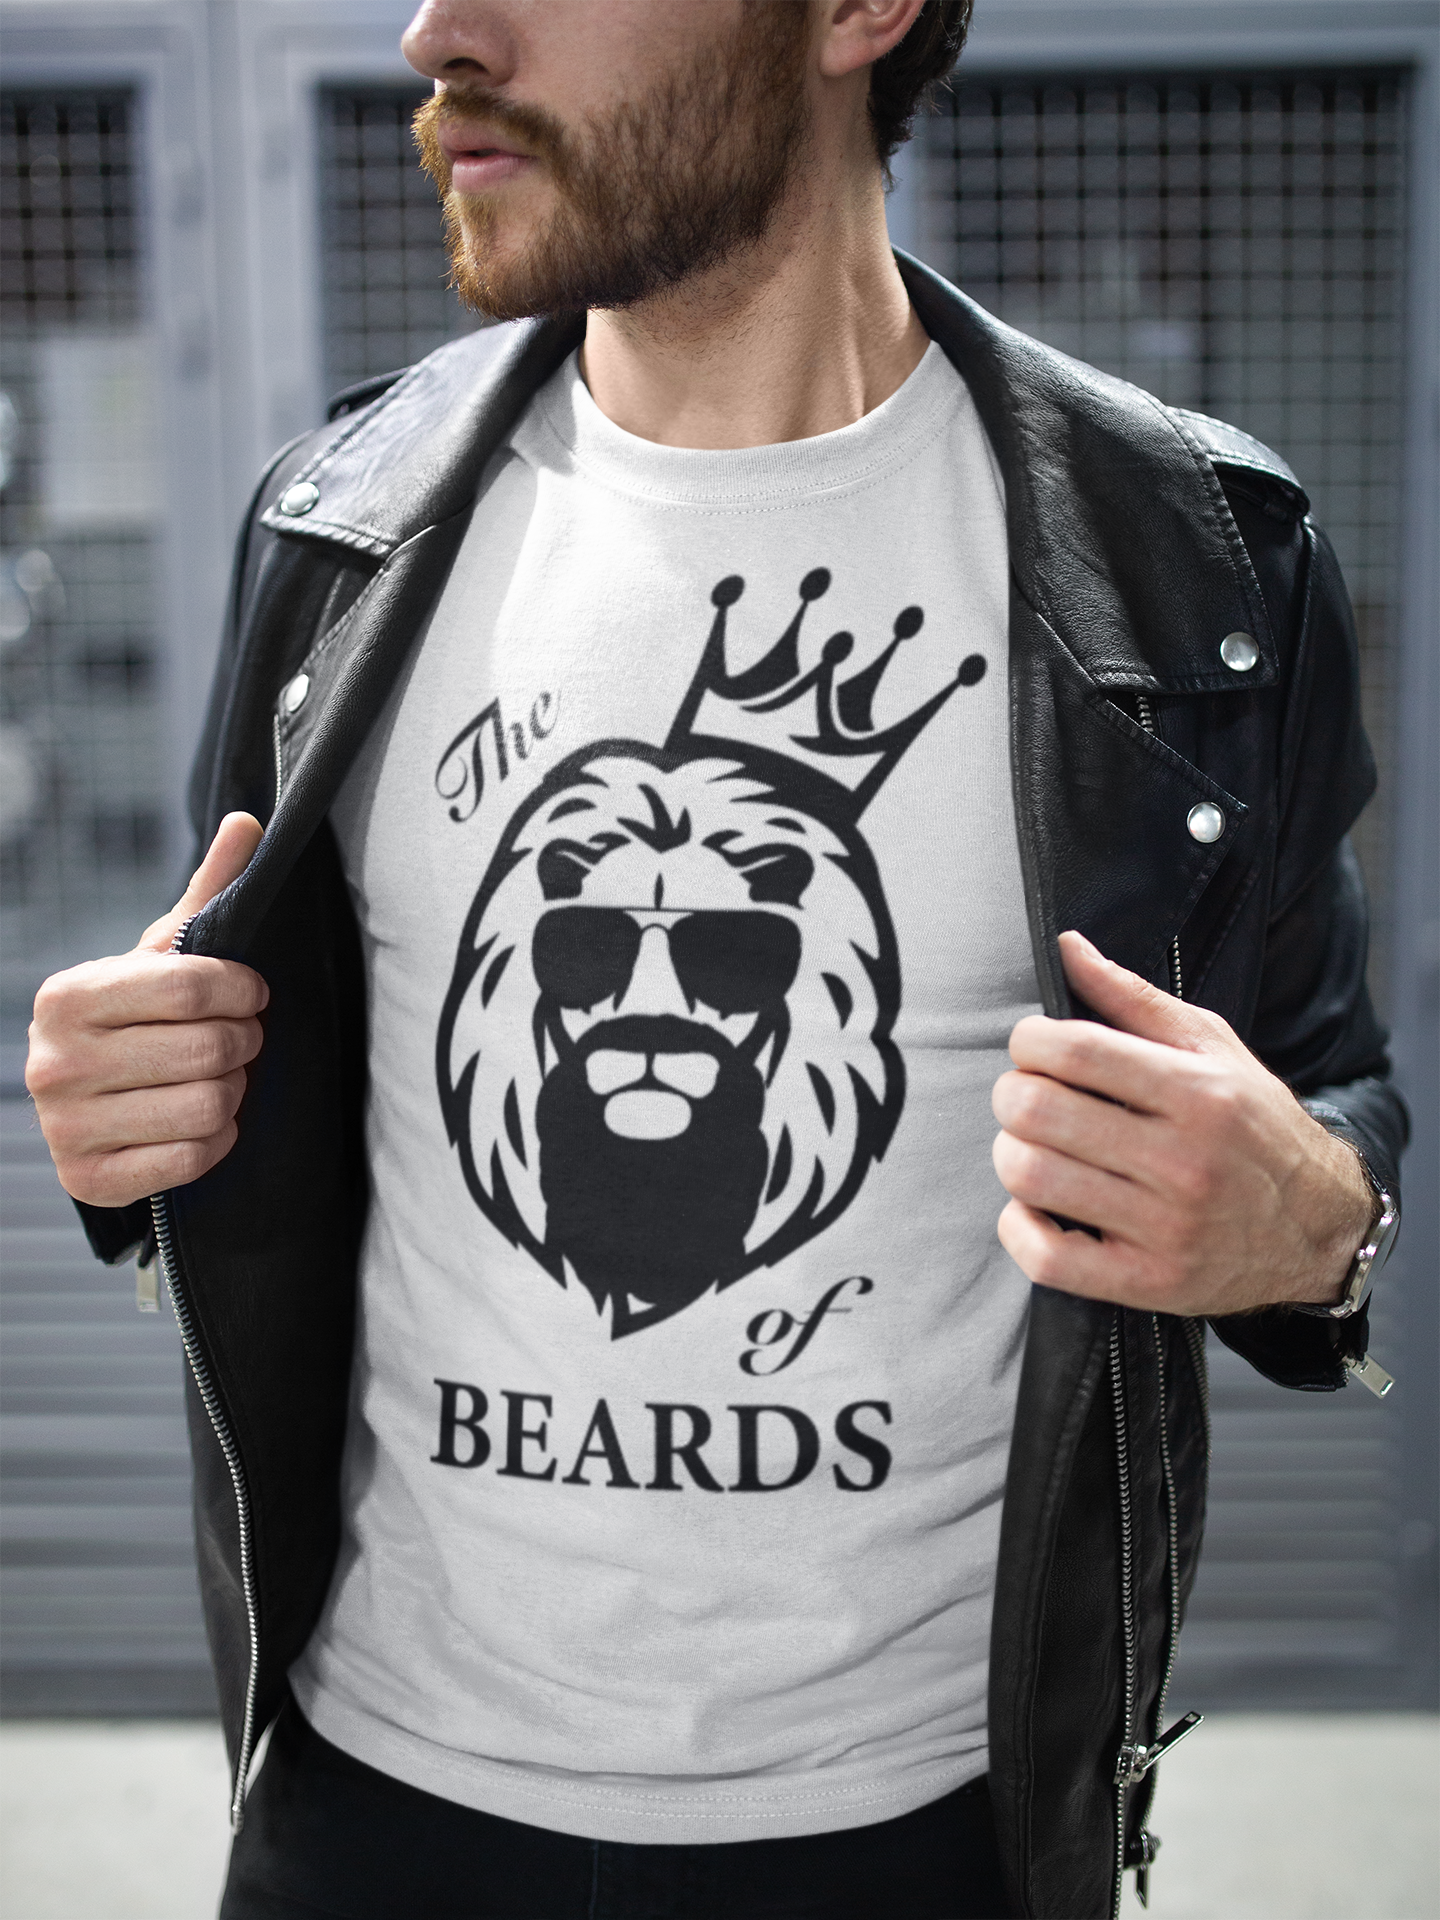 The King of Beards Shirt.